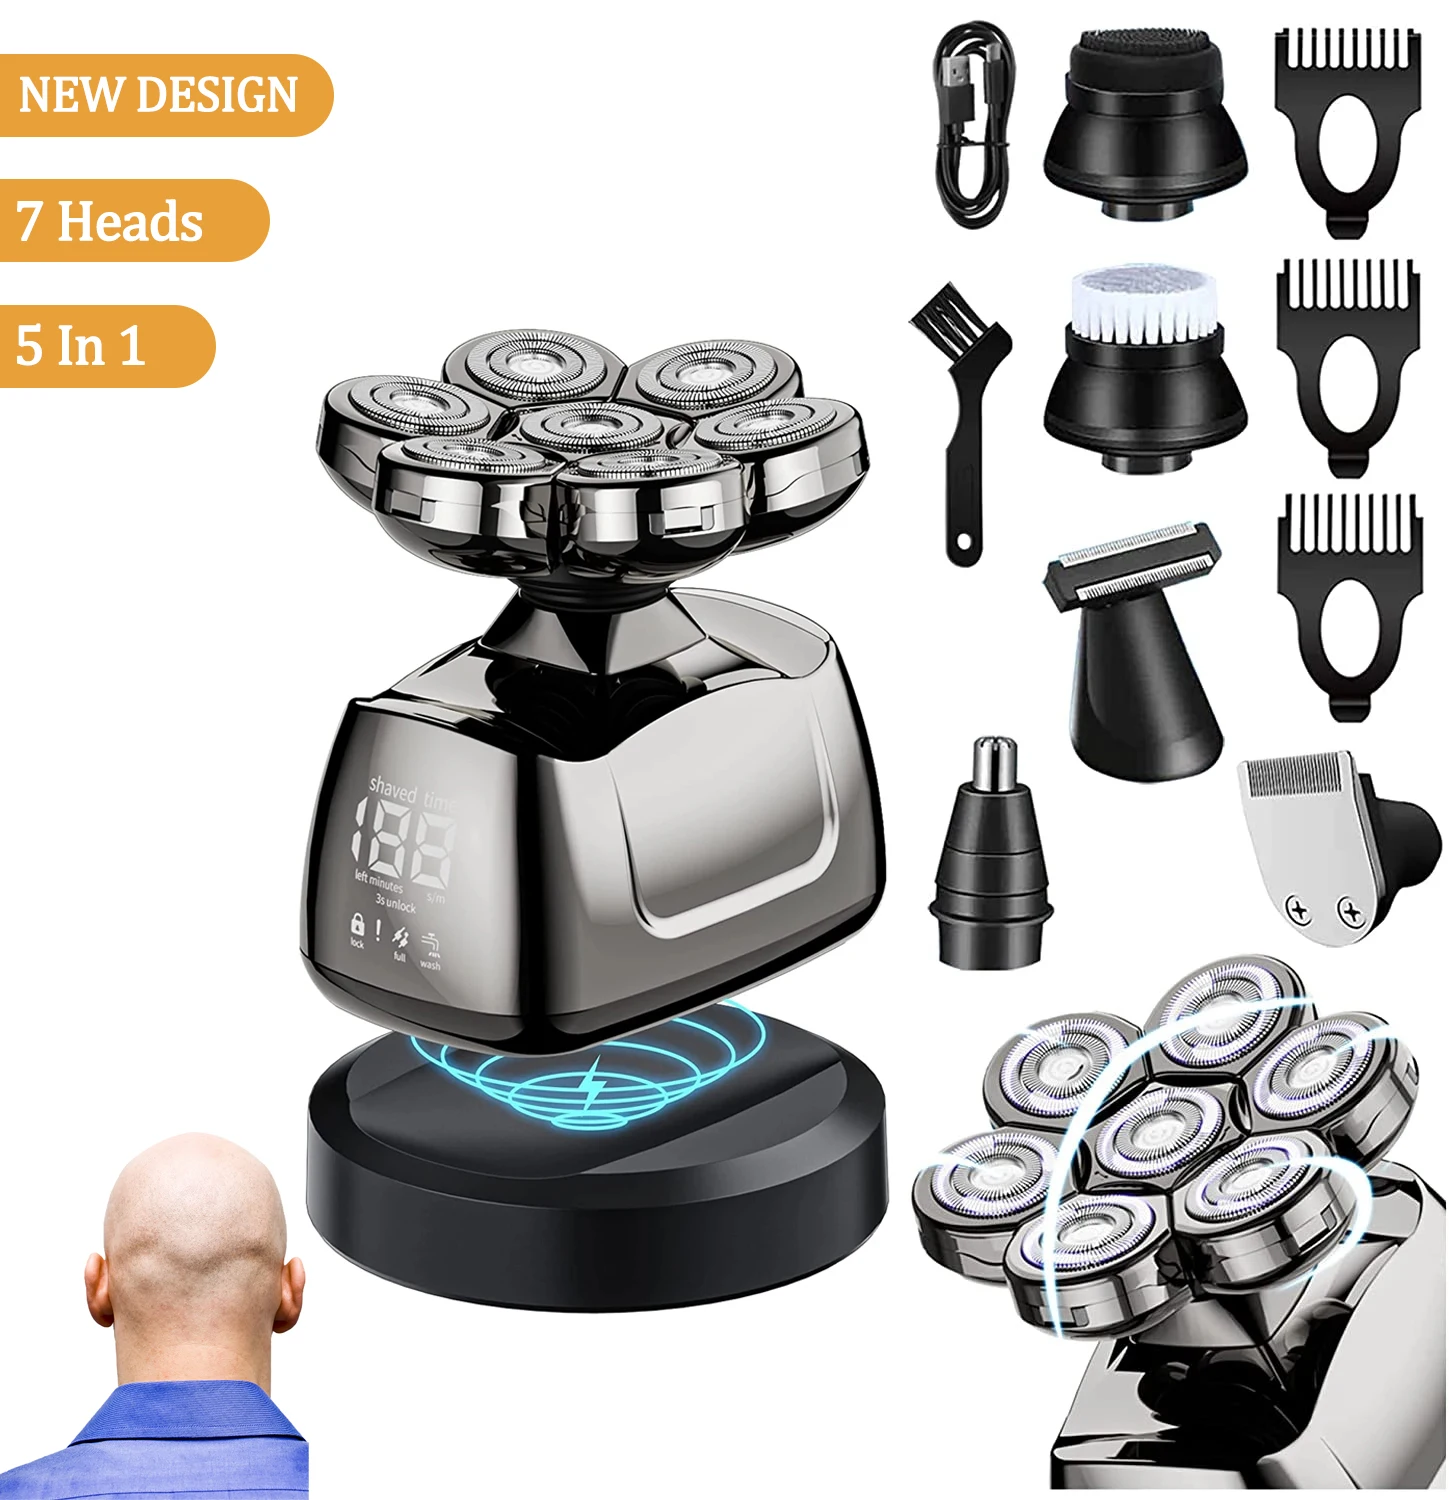 

Hot Sale 5 in 1 Grooming Kit Electric Razor Bald Men Beard Trimmer Shaving Machine Rotary Waterproof Electric Hair Shaver